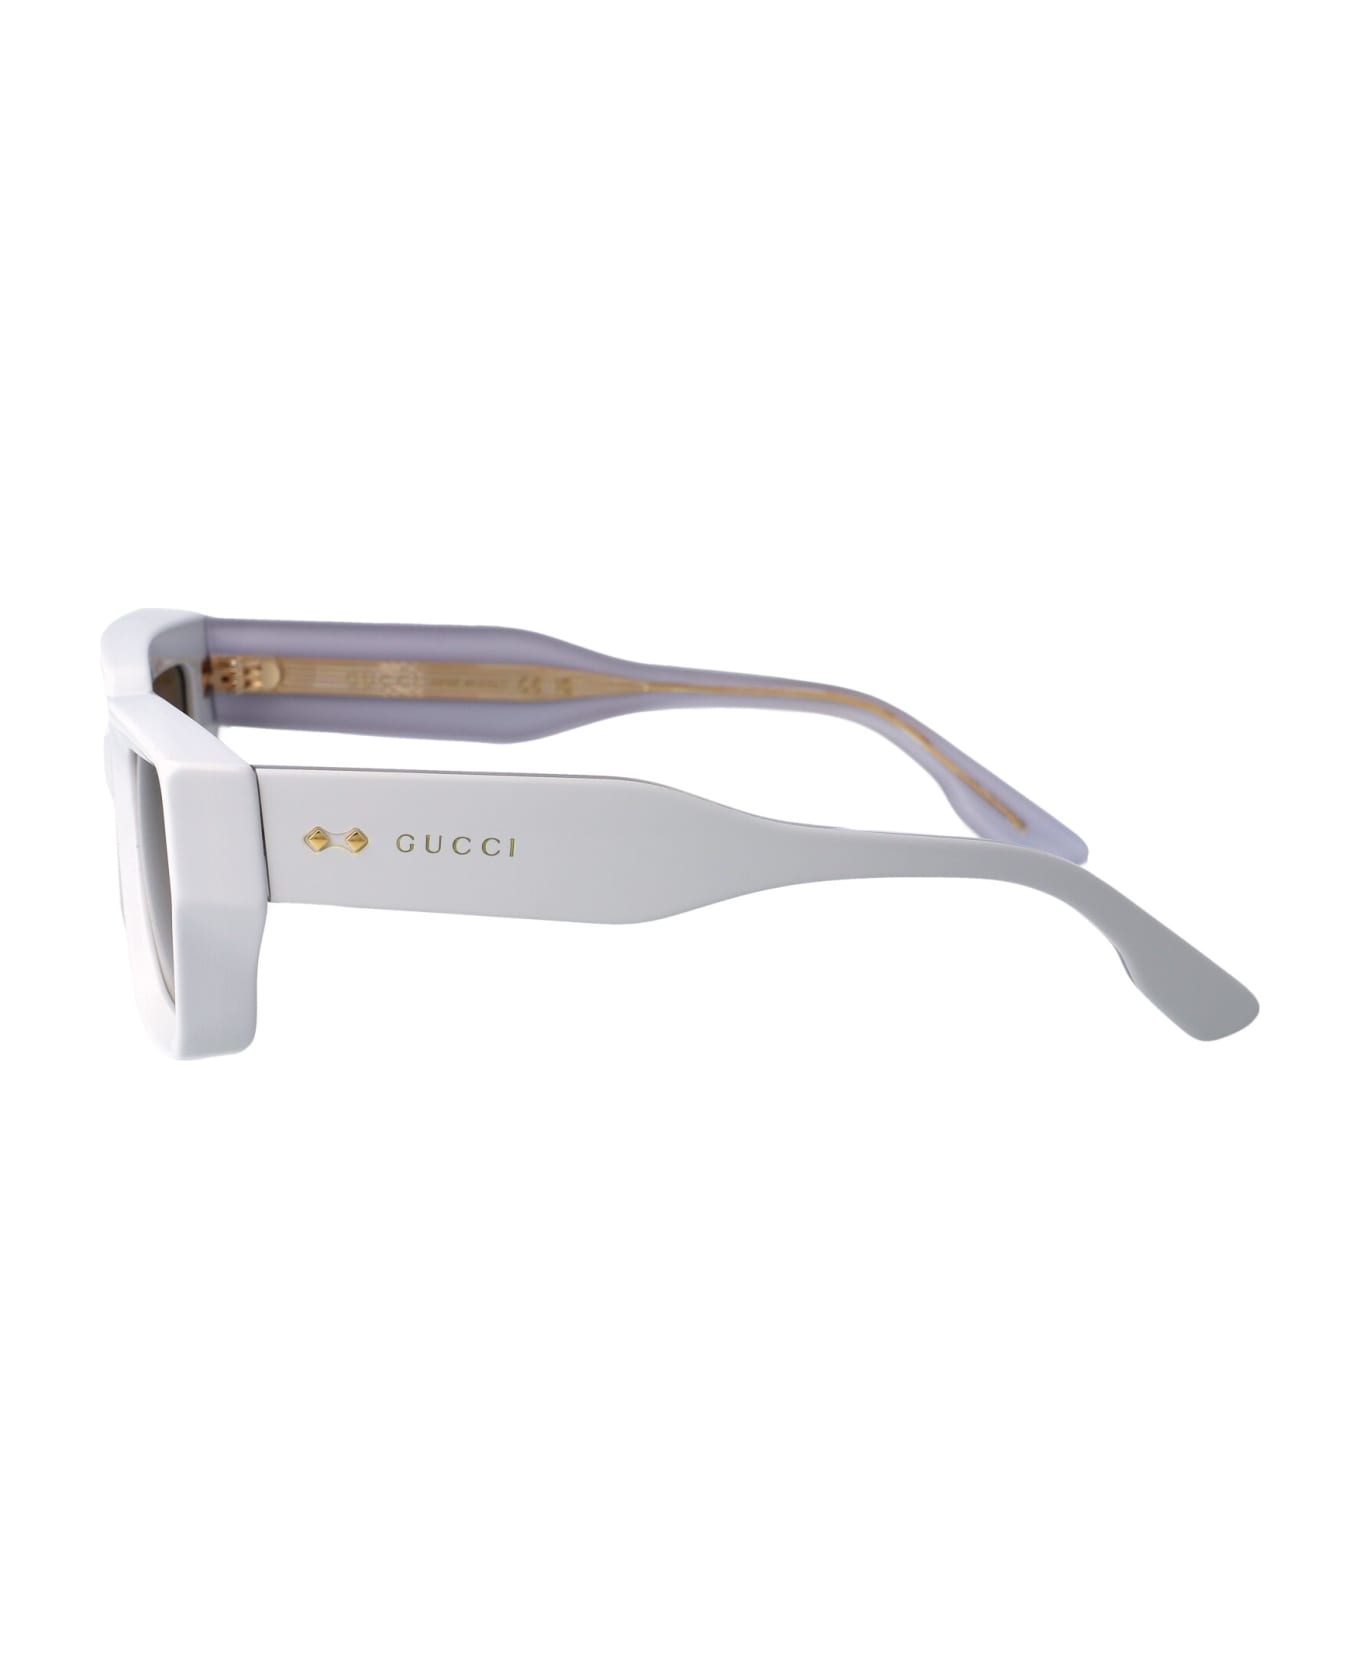 Gucci Eyewear Gg1529s Sunglasses - 004 GREY GREY BROWN